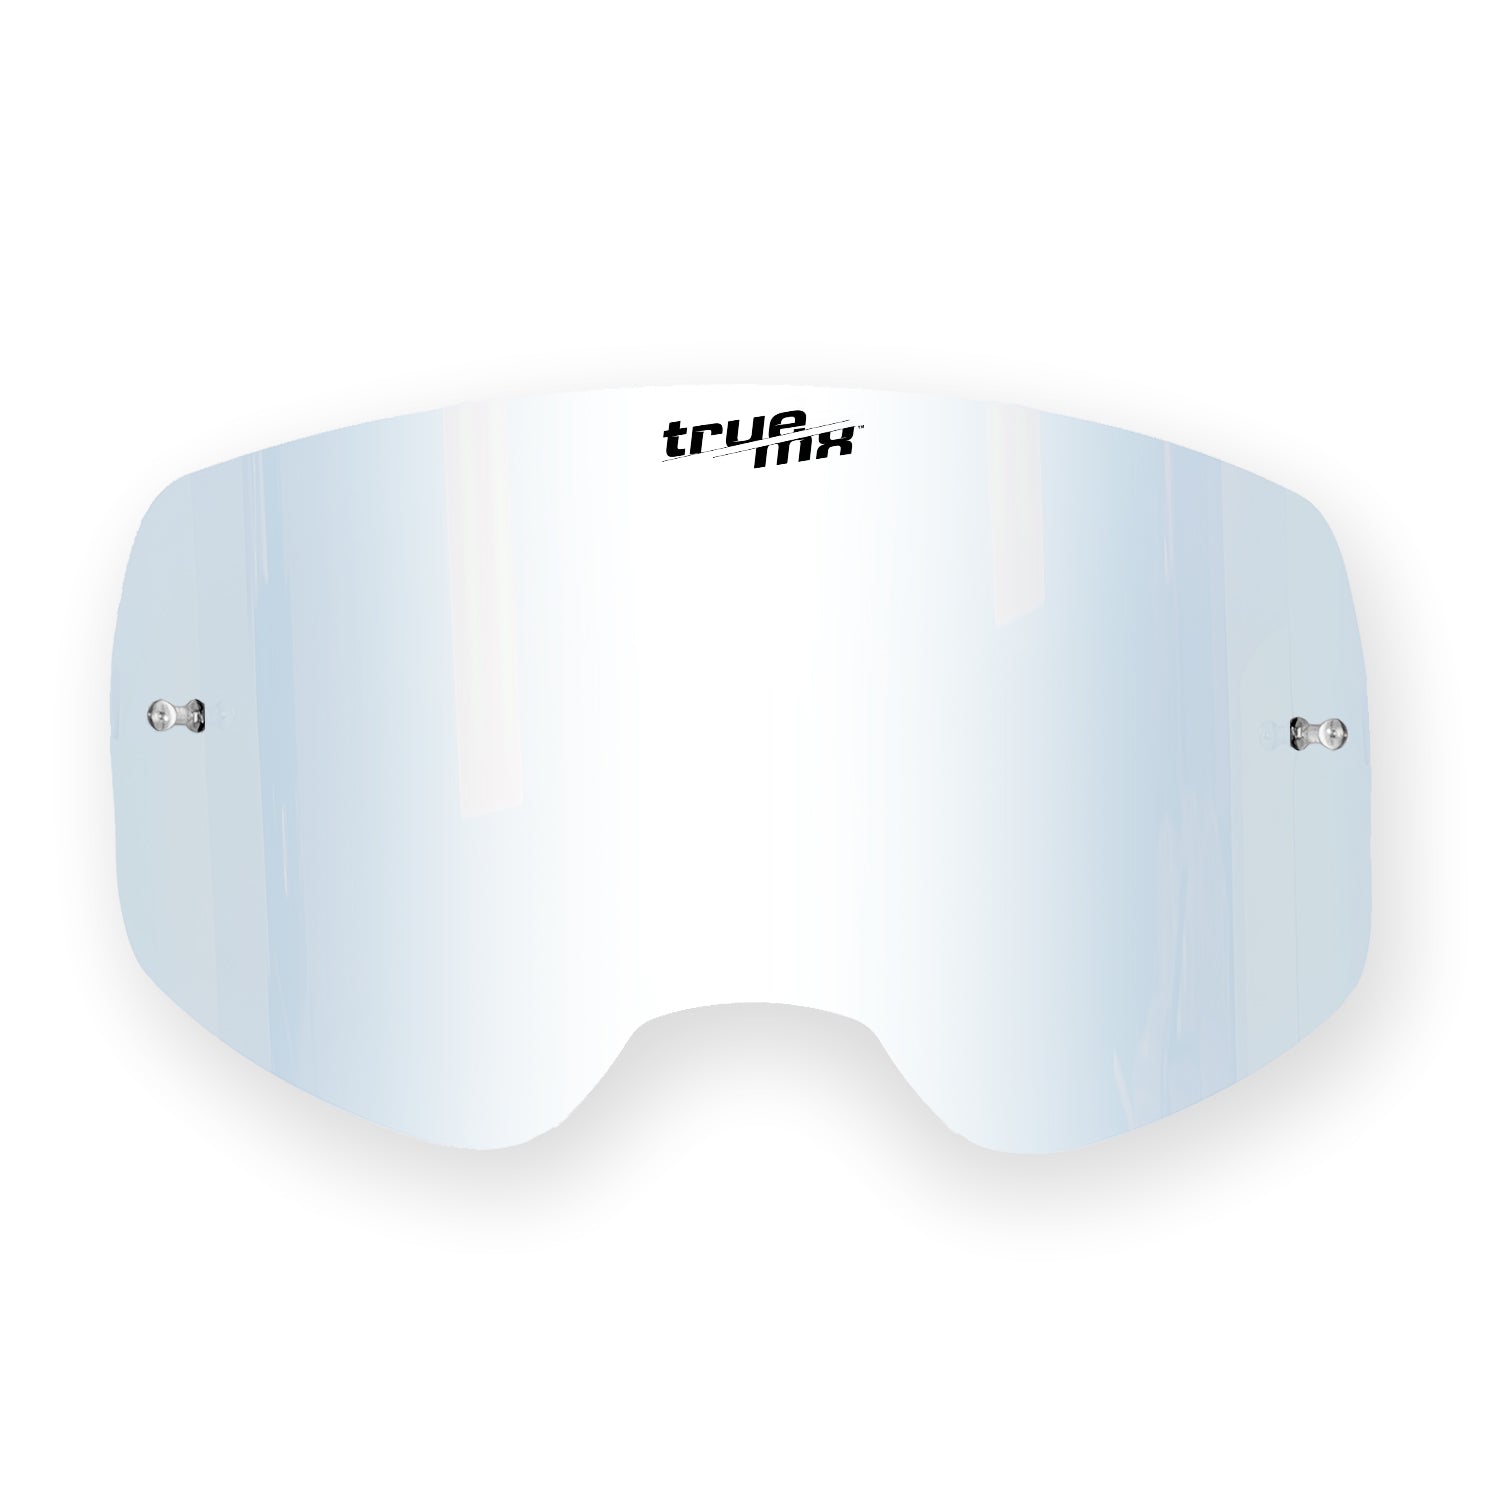 2023 TrueMX TITAN Goggle - Replacement Lenses